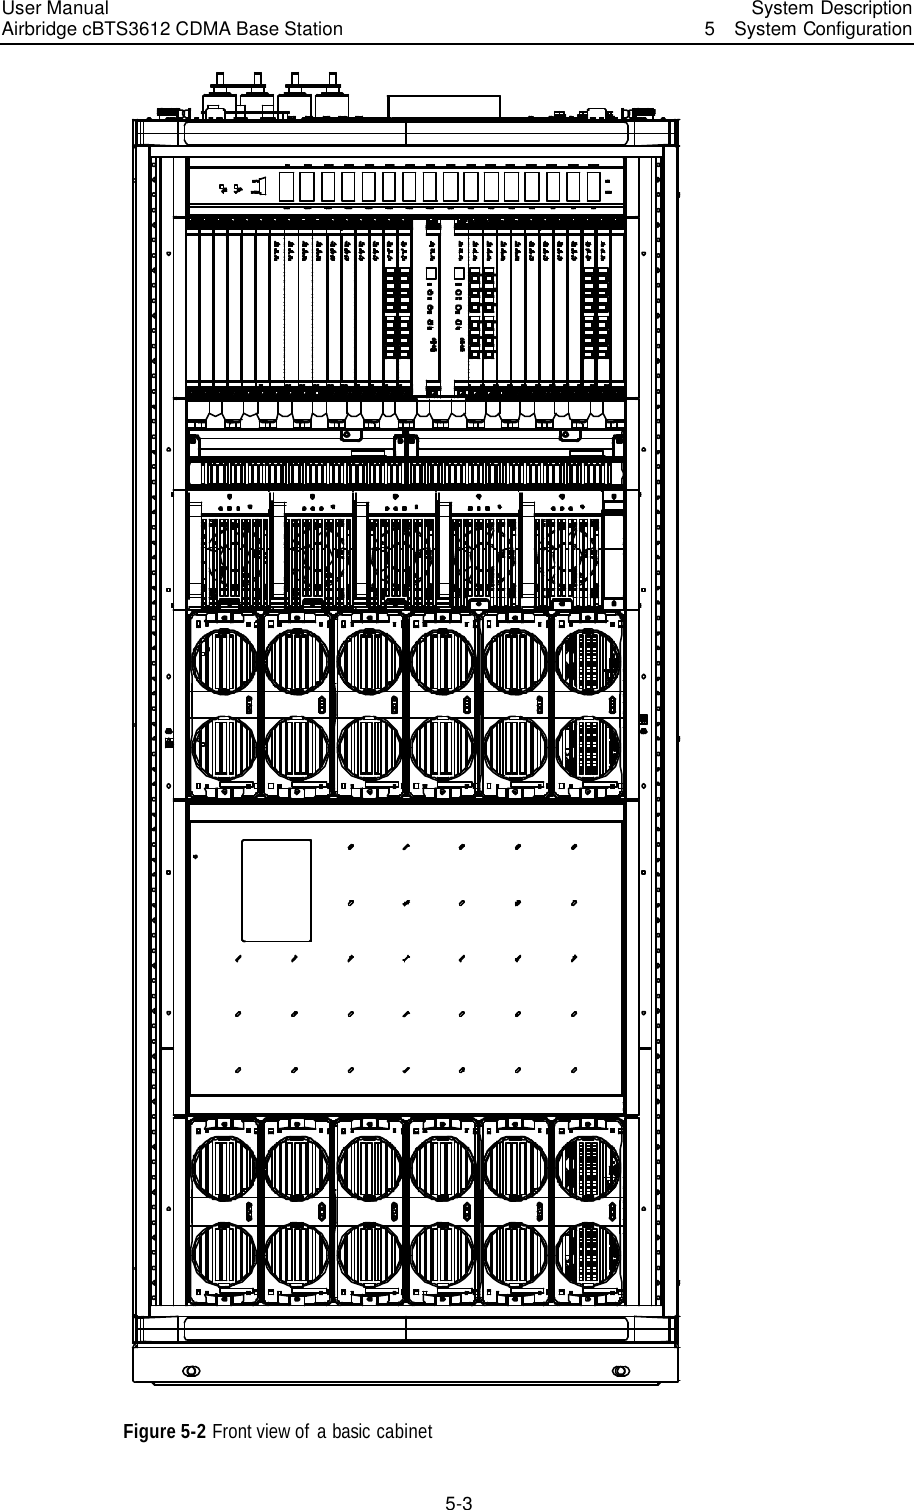 User Manual Airbridge cBTS3612 CDMA Base Station   System Description5  System Configuration 5-3  Figure 5-2 Front view of  a basic cabinet   